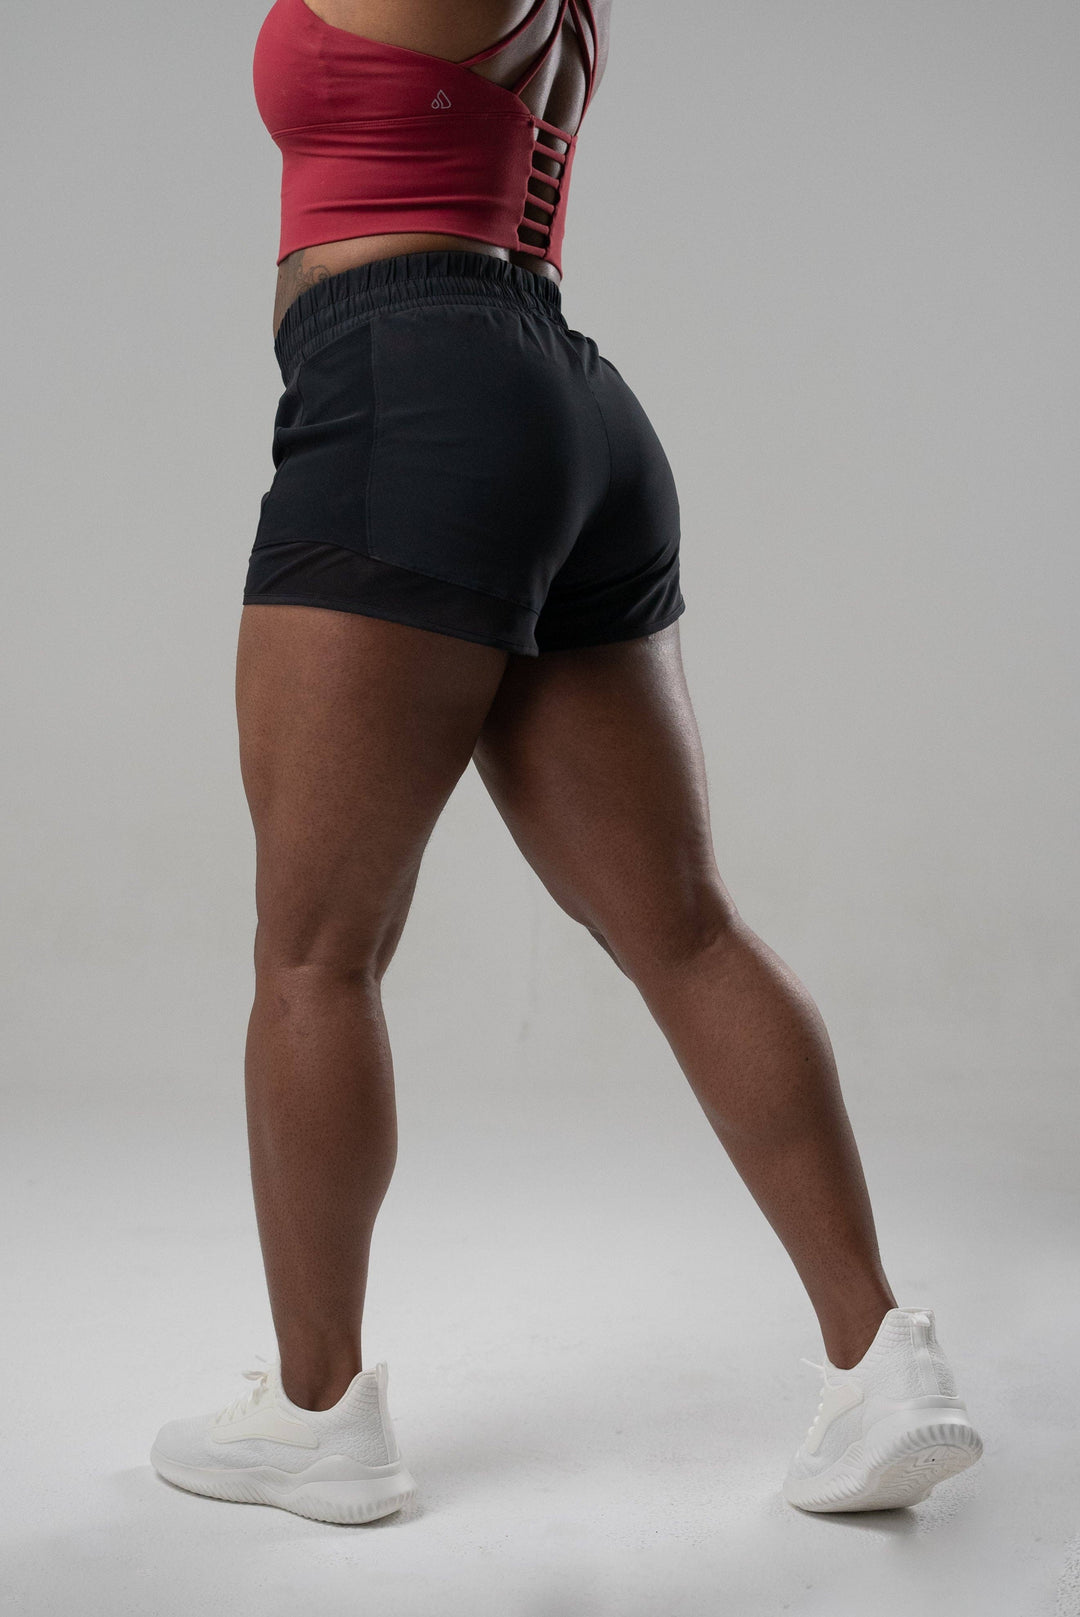 Alyth Active - Empowered shorts 3"